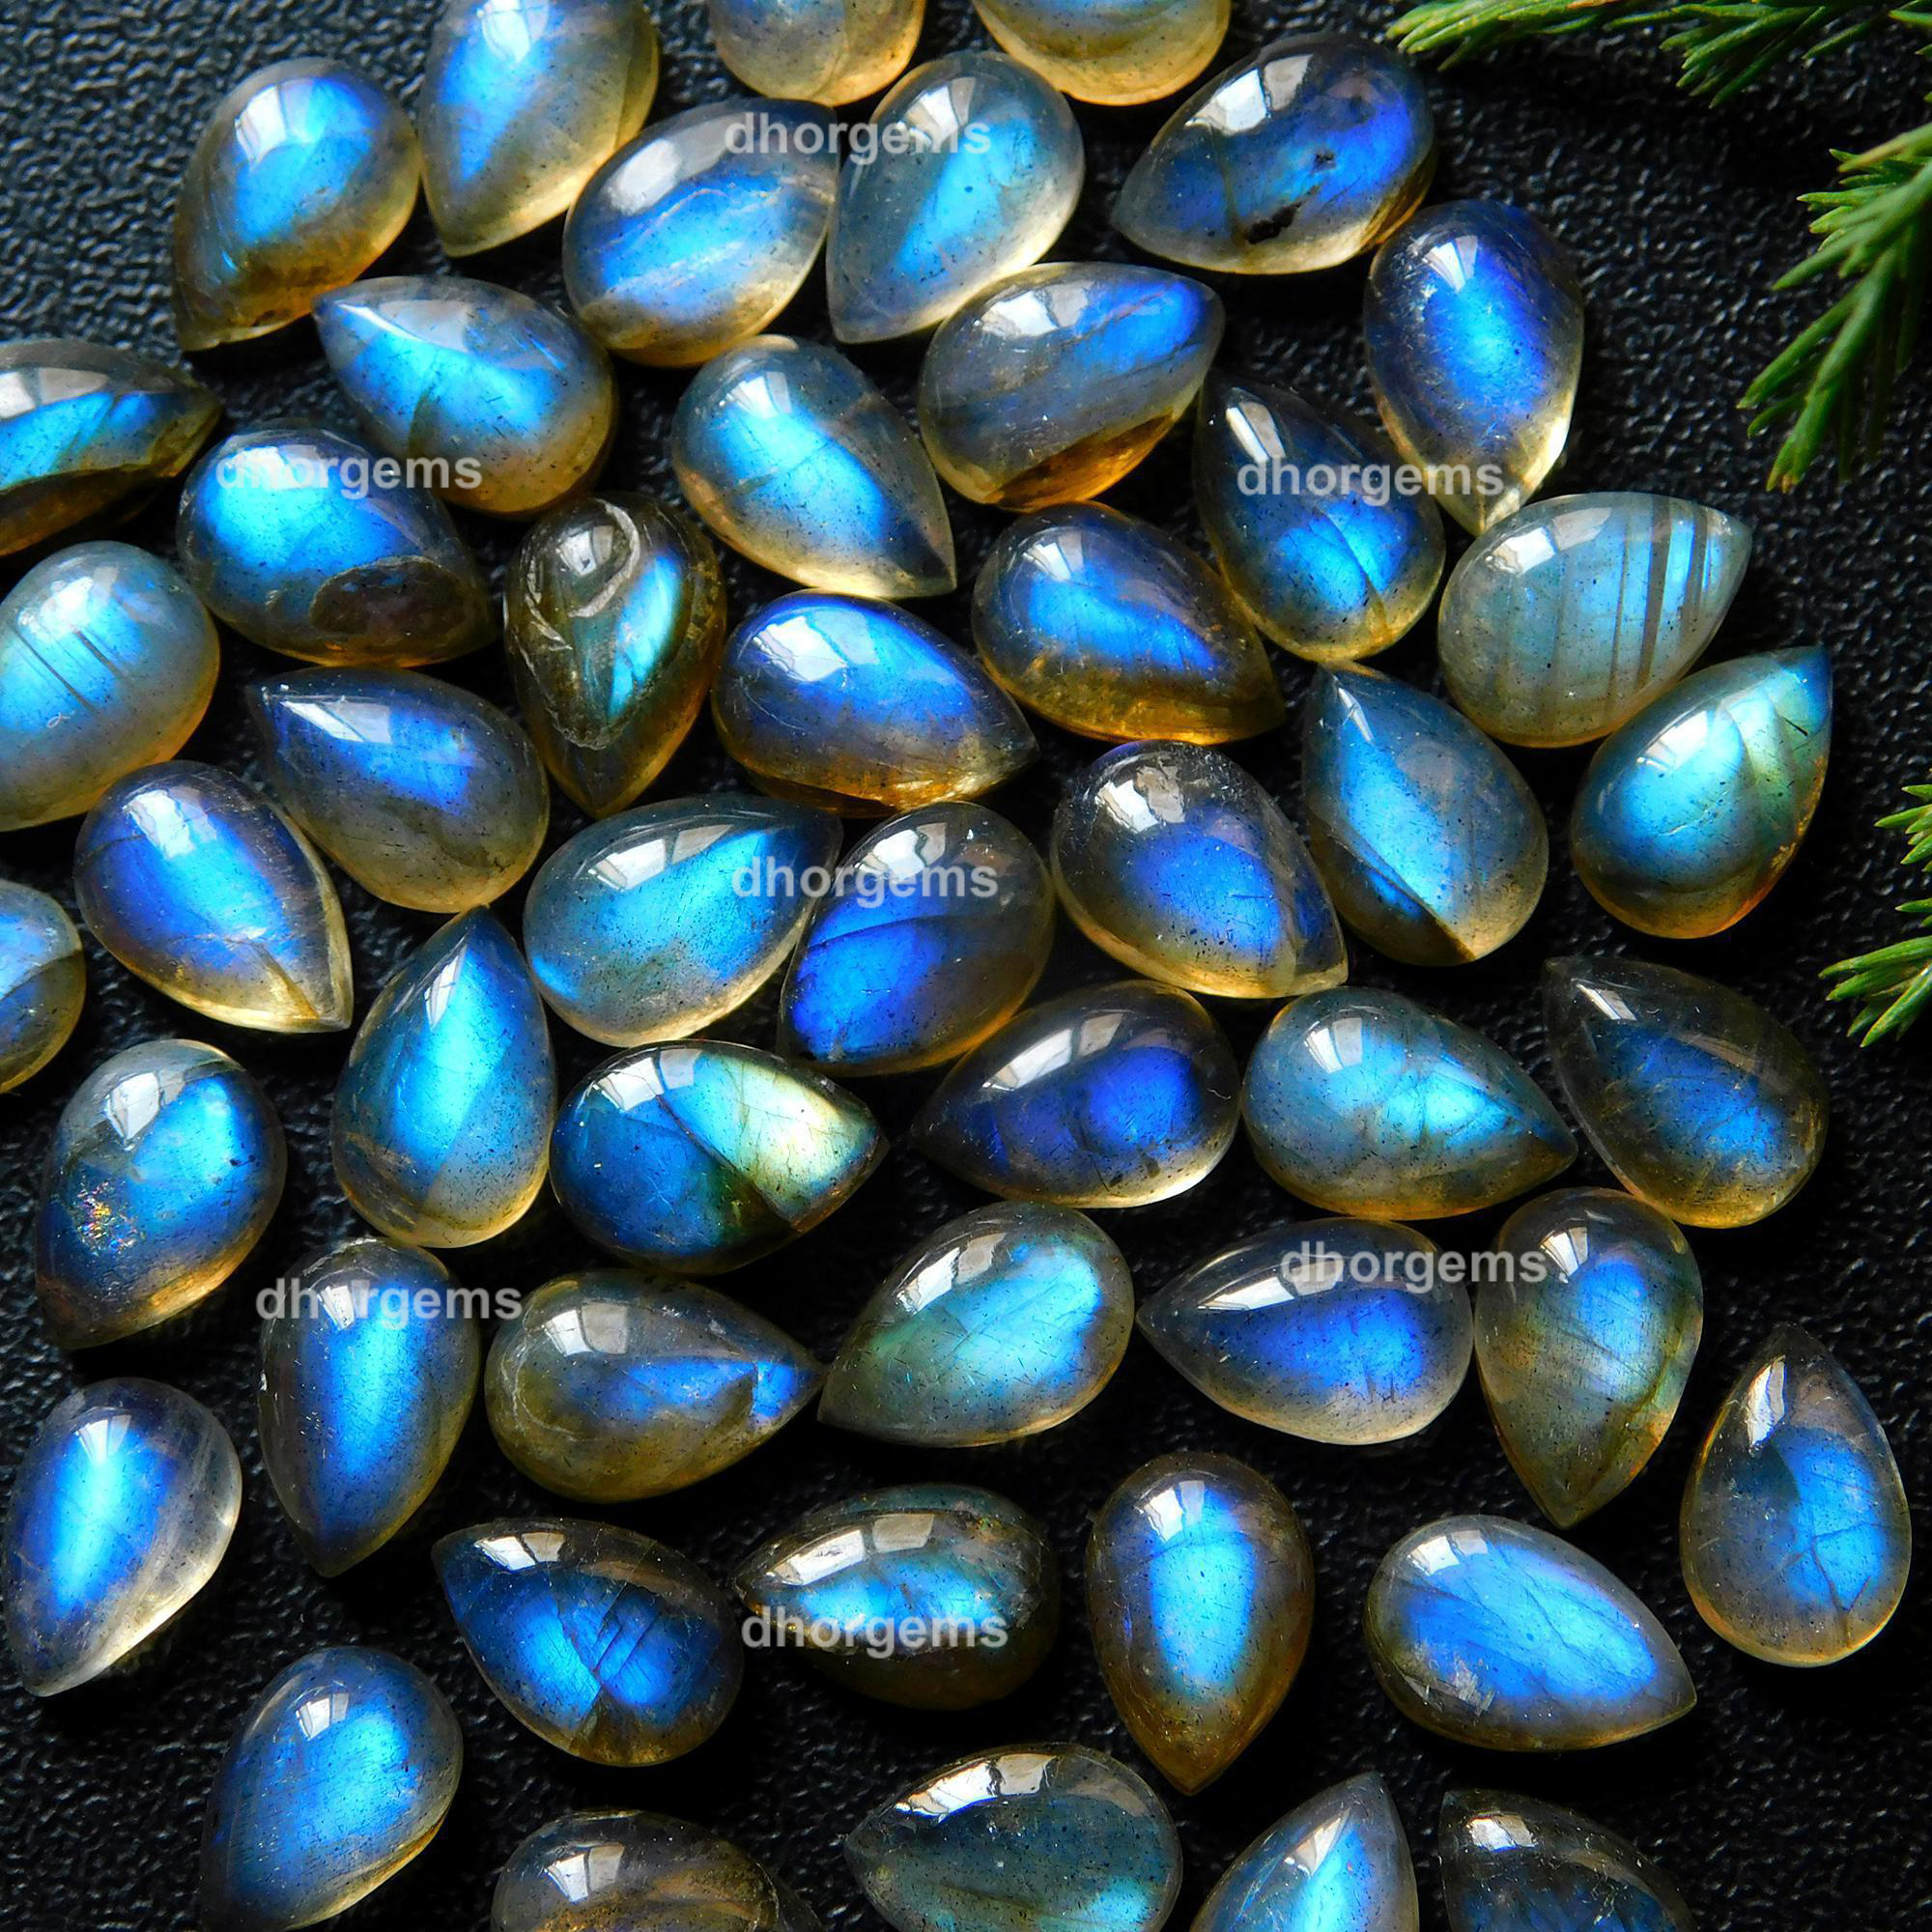 49Pcs 82.35Cts Natural Blue Fire Labradorite Loose Cabochon Calibrated Pear Shape Gemstone Lot 6x9mm#9269